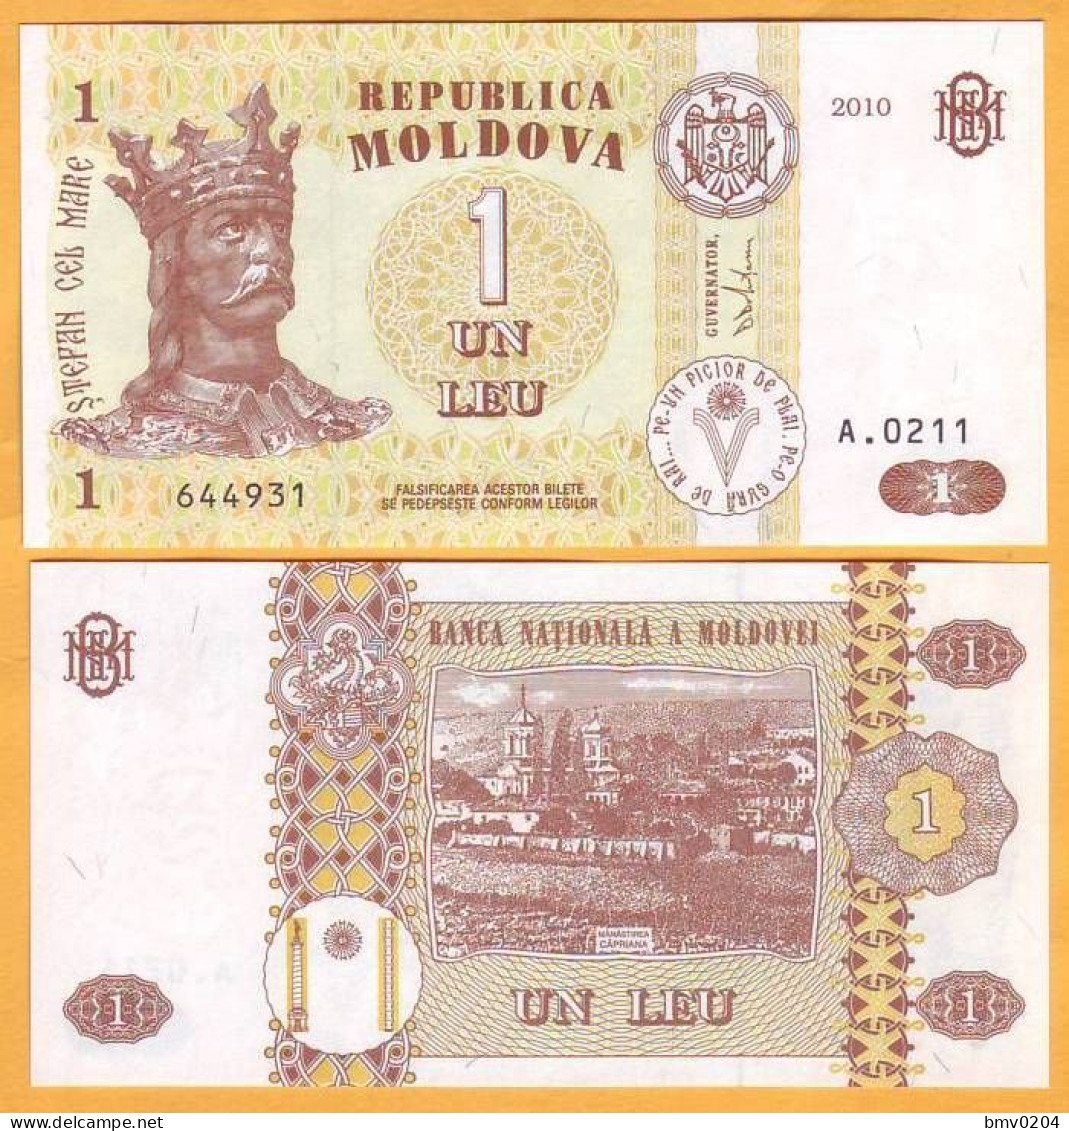 Moldova Moldavie  5 Banknotes  "1 LEI  2010", UNC  One Set Of 5 1 Leu Banknotes. - Moldova